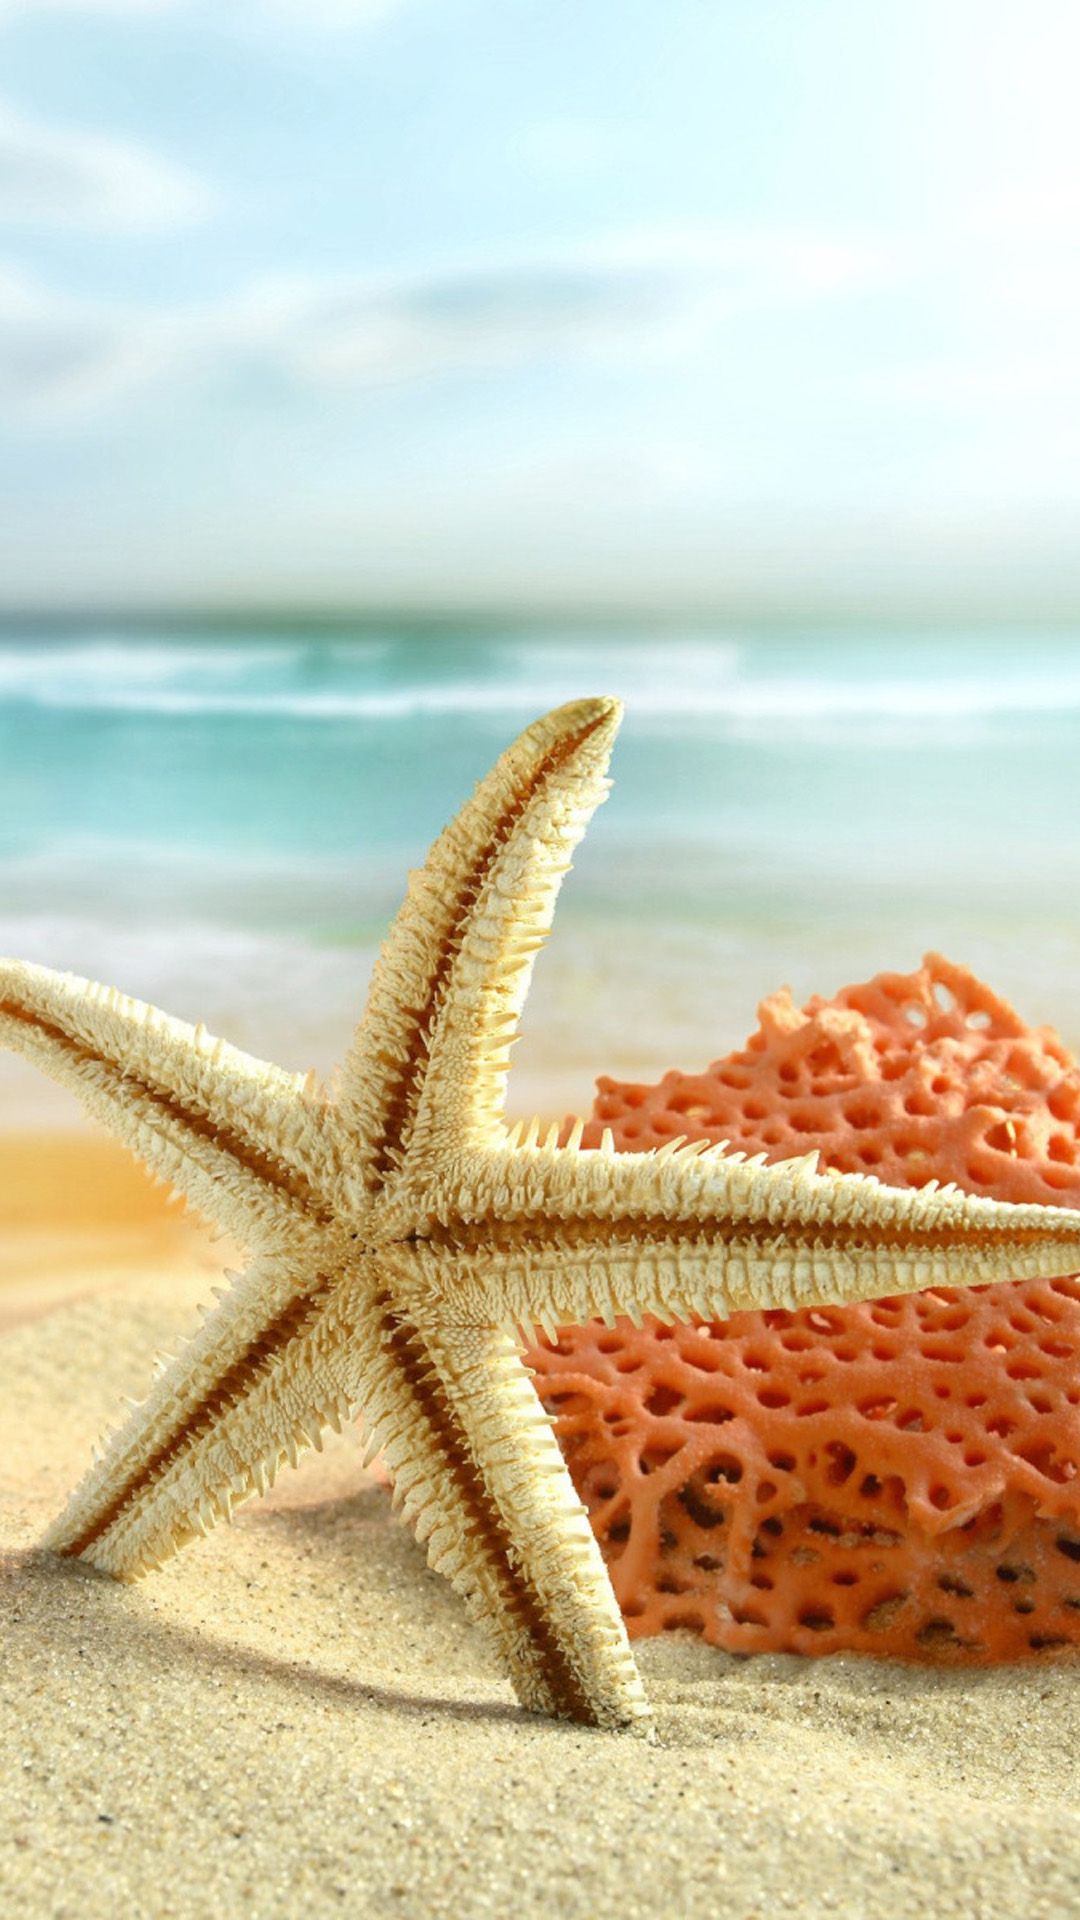 Starfish and coral on the beach - Starfish